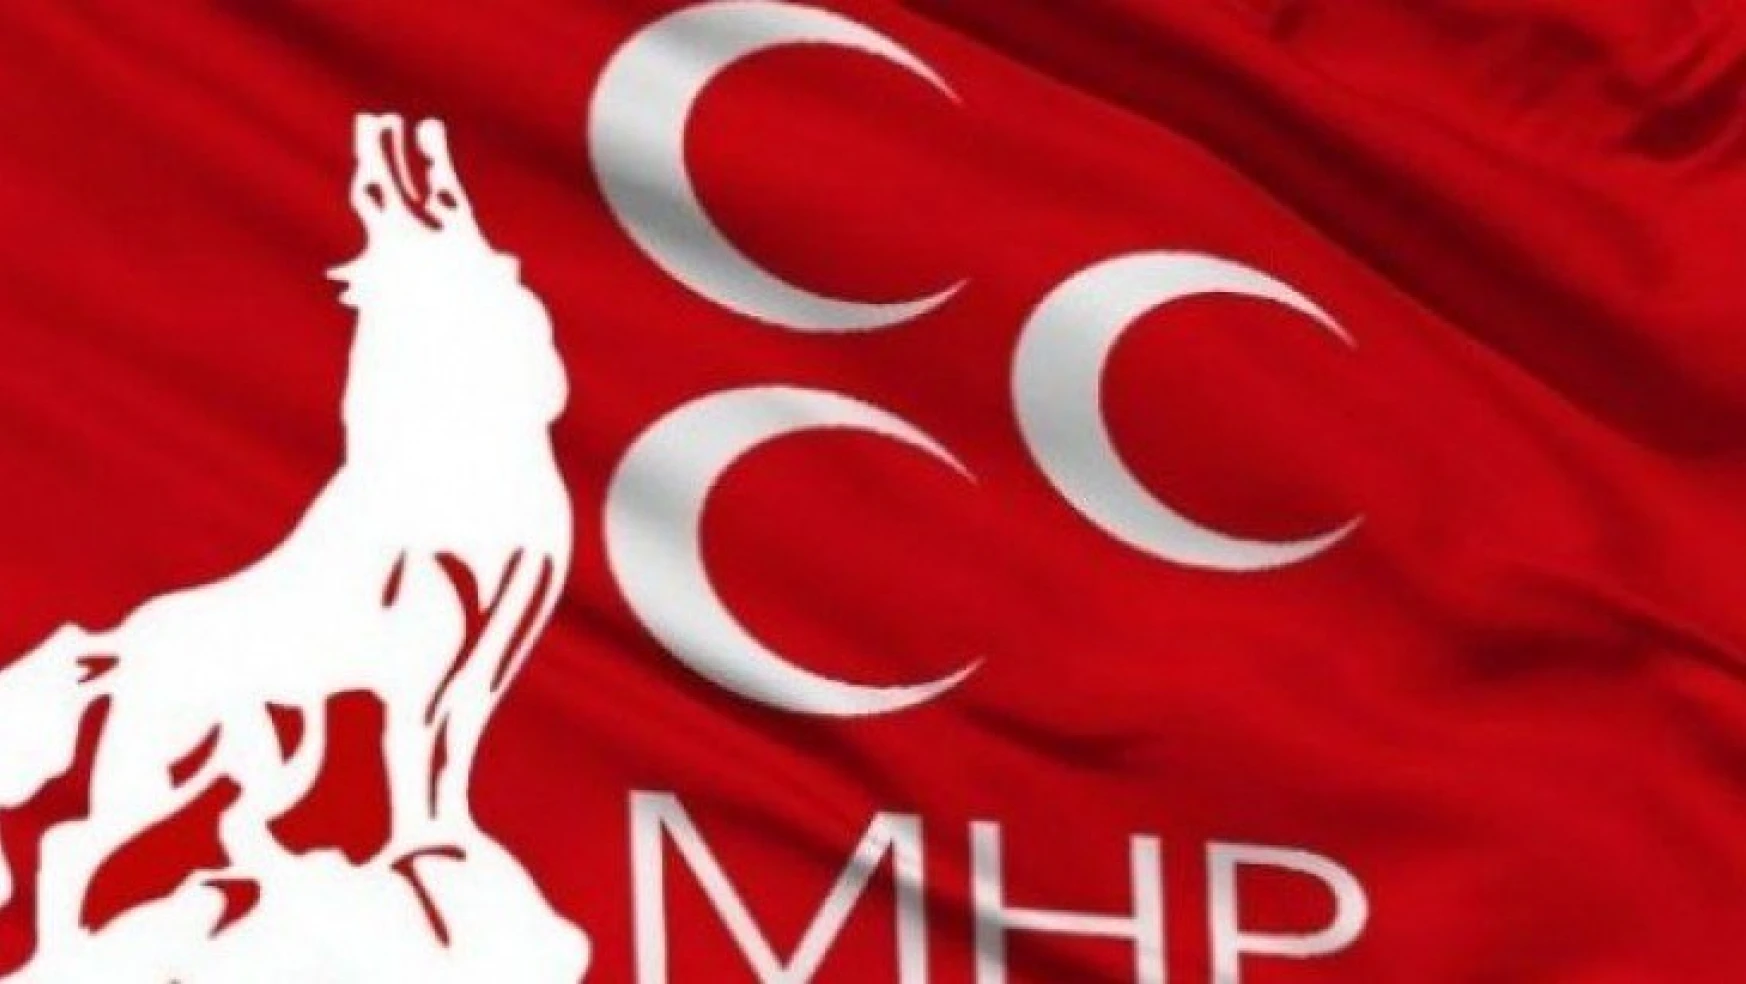 Kara listede olan Vatandaşlar için MHP Af istedi